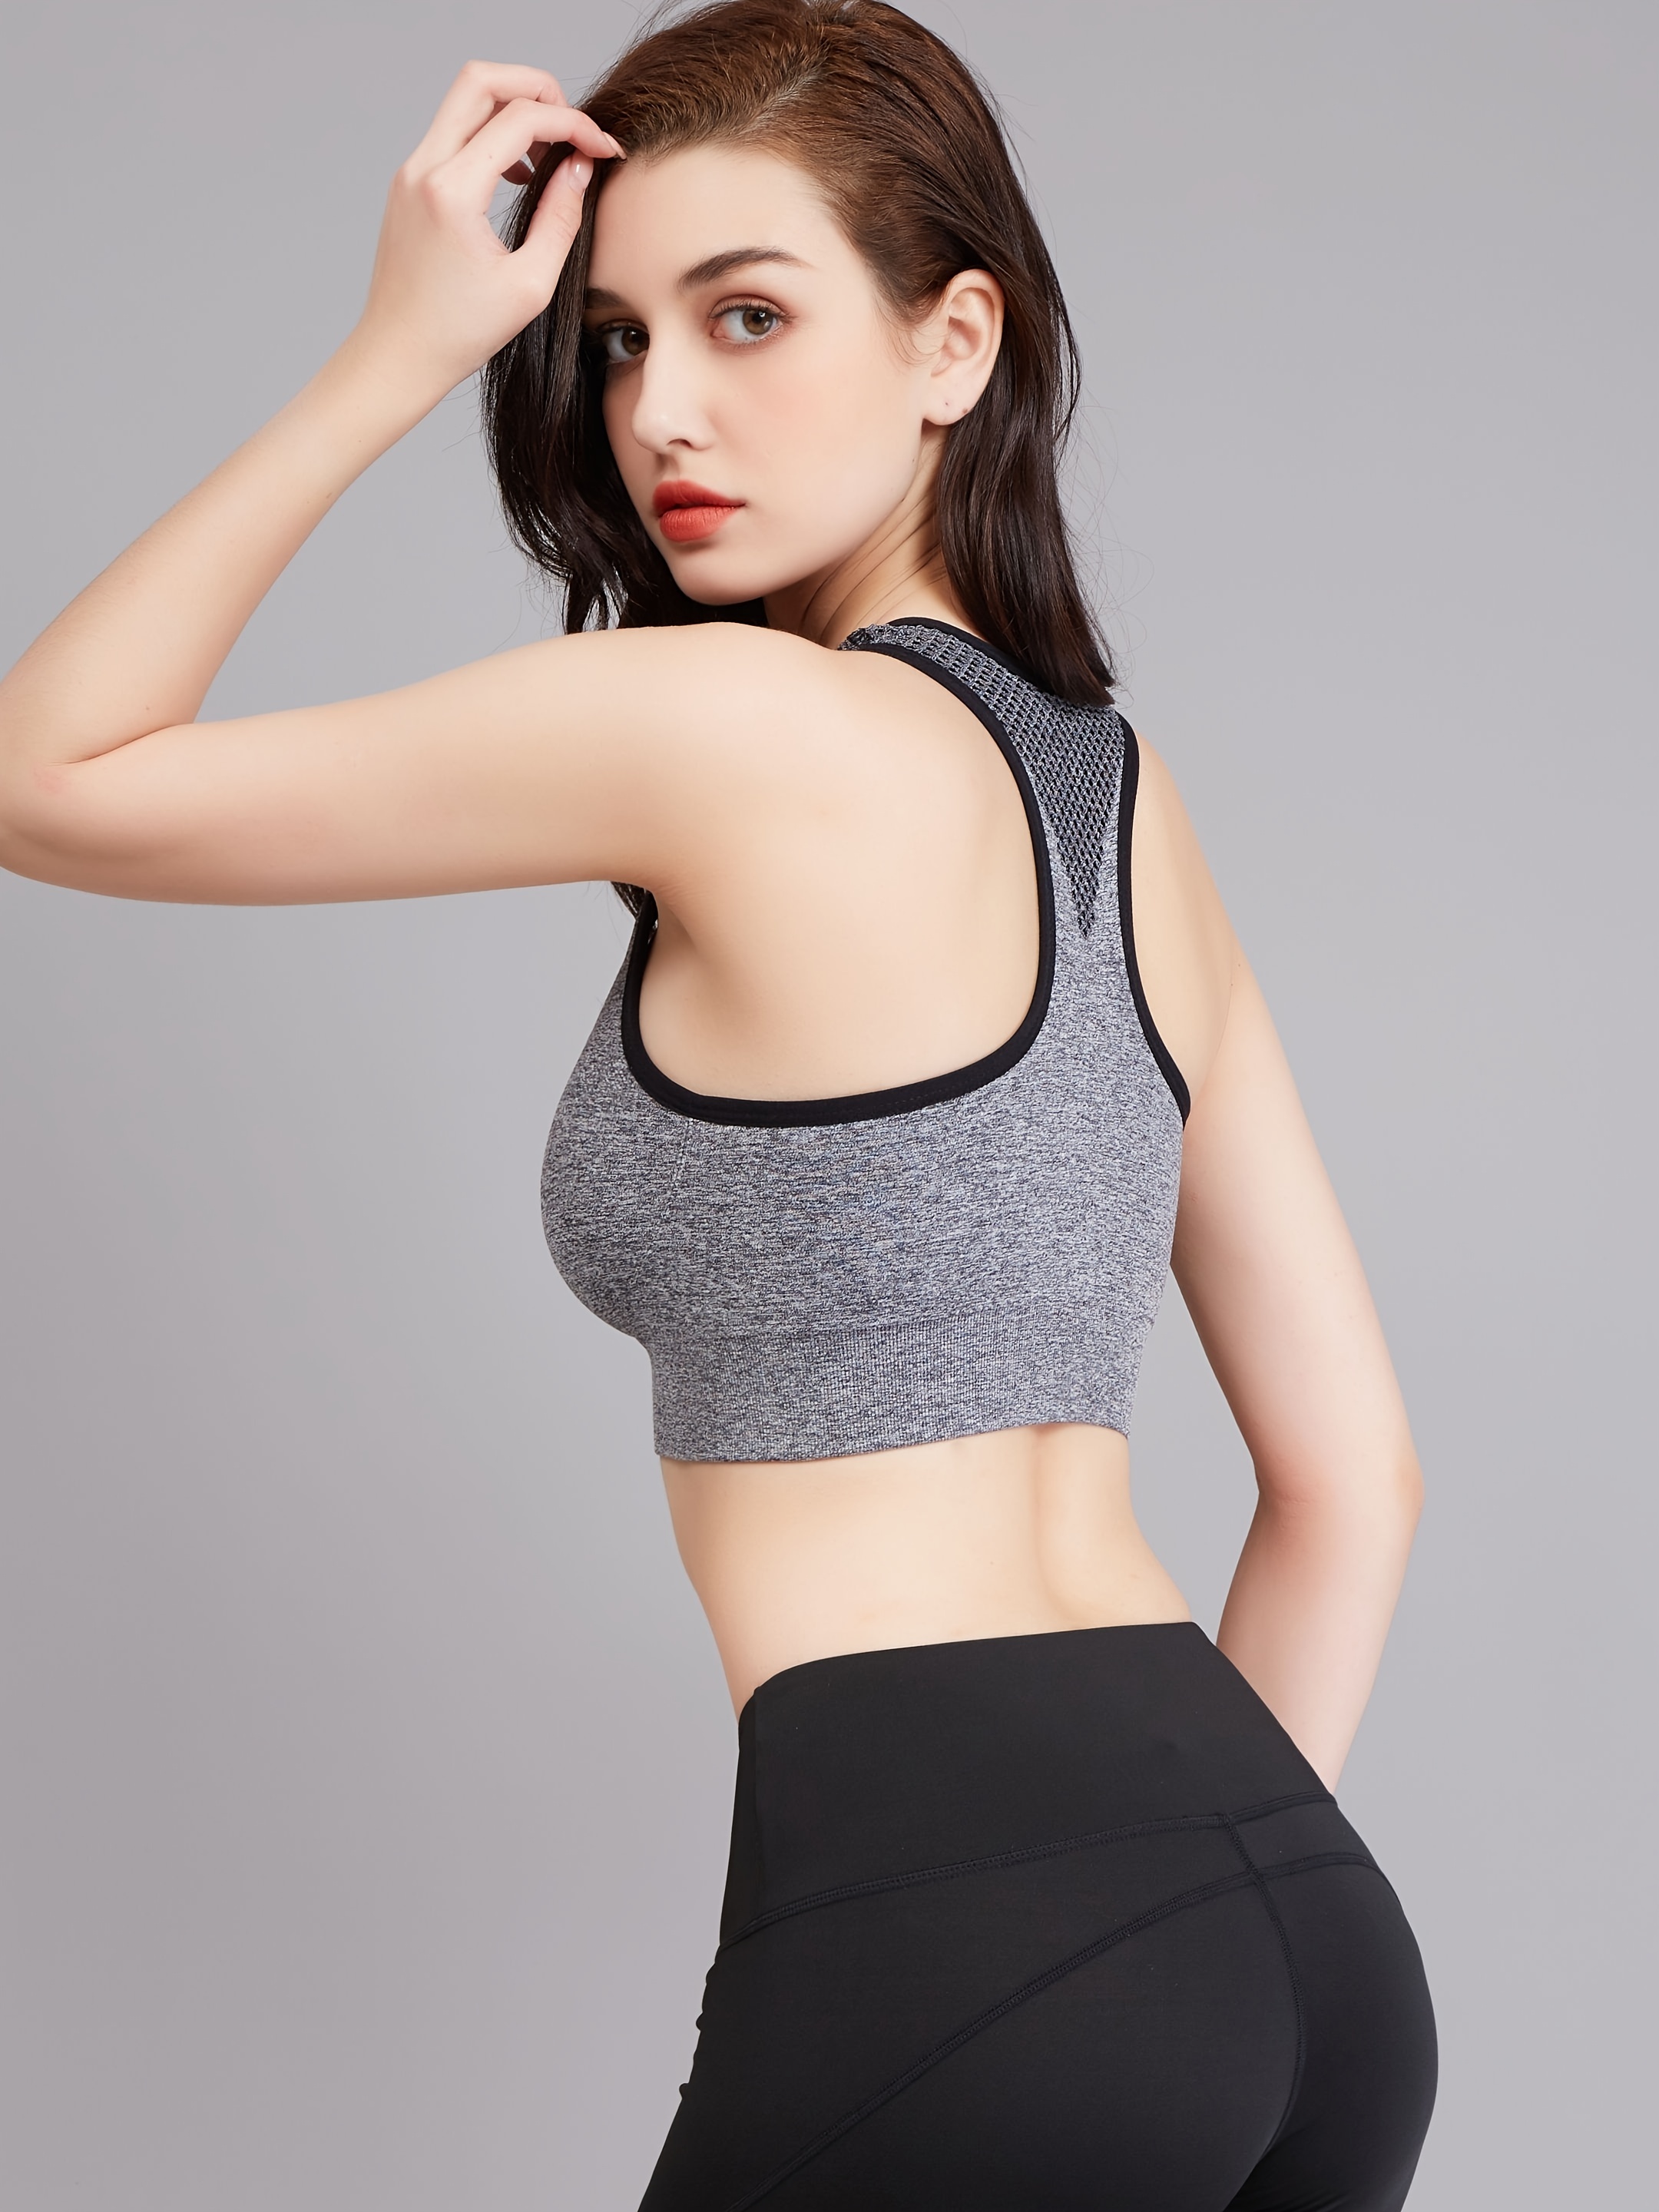 Elbourn Women Sports Bra Wirefree Yoga Bras Tank Top High Intensity Push Up  High Impact Workout Gym Activewear BraPack of 3